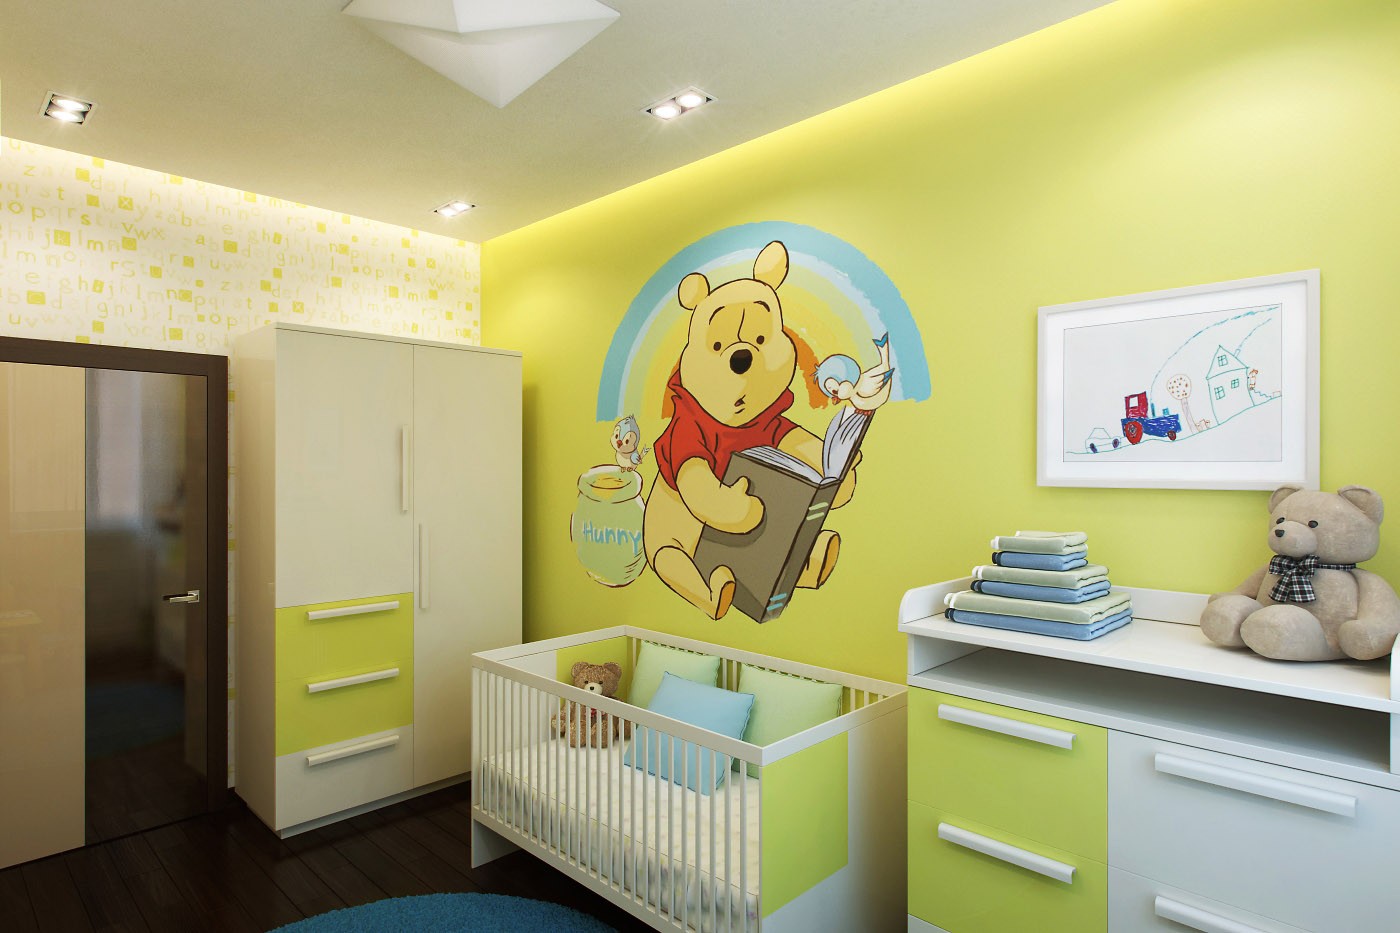 Комната мамы и мальчика. Интерьер детской. Покраска стен в детской. Комната для новорожденного. Интерьер детской комнаты для новорожденного.